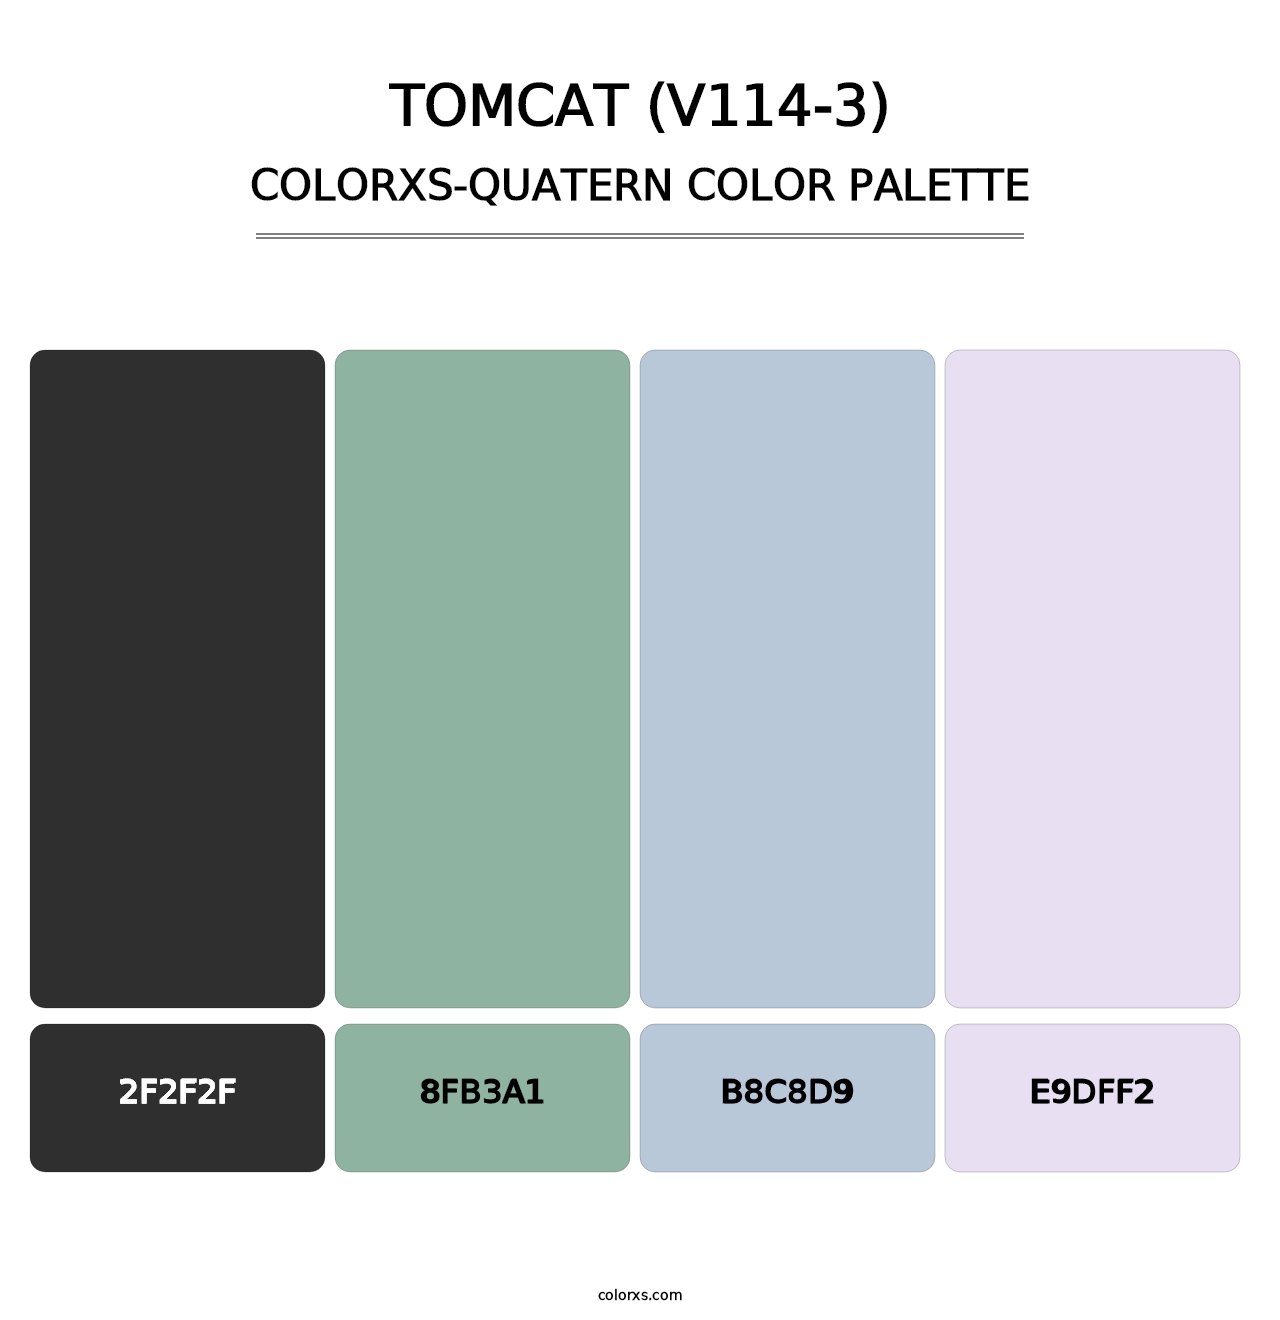 Tomcat (V114-3) - Colorxs Quatern Palette